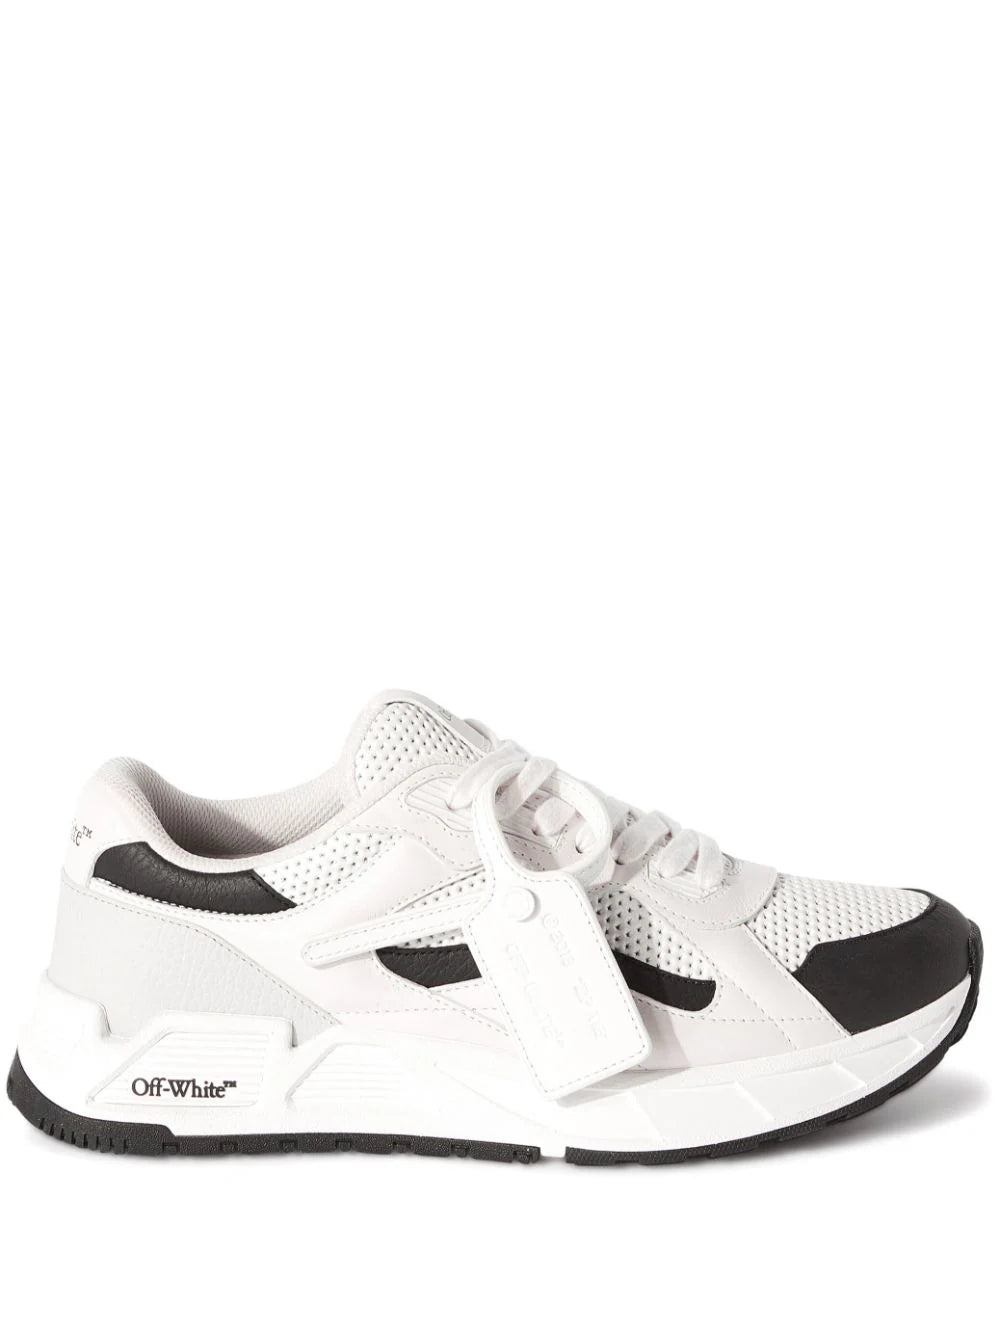 OFF-WHITE MEN Kick Low Top Sneakers White/Black - MAISONDEFASHION.COM